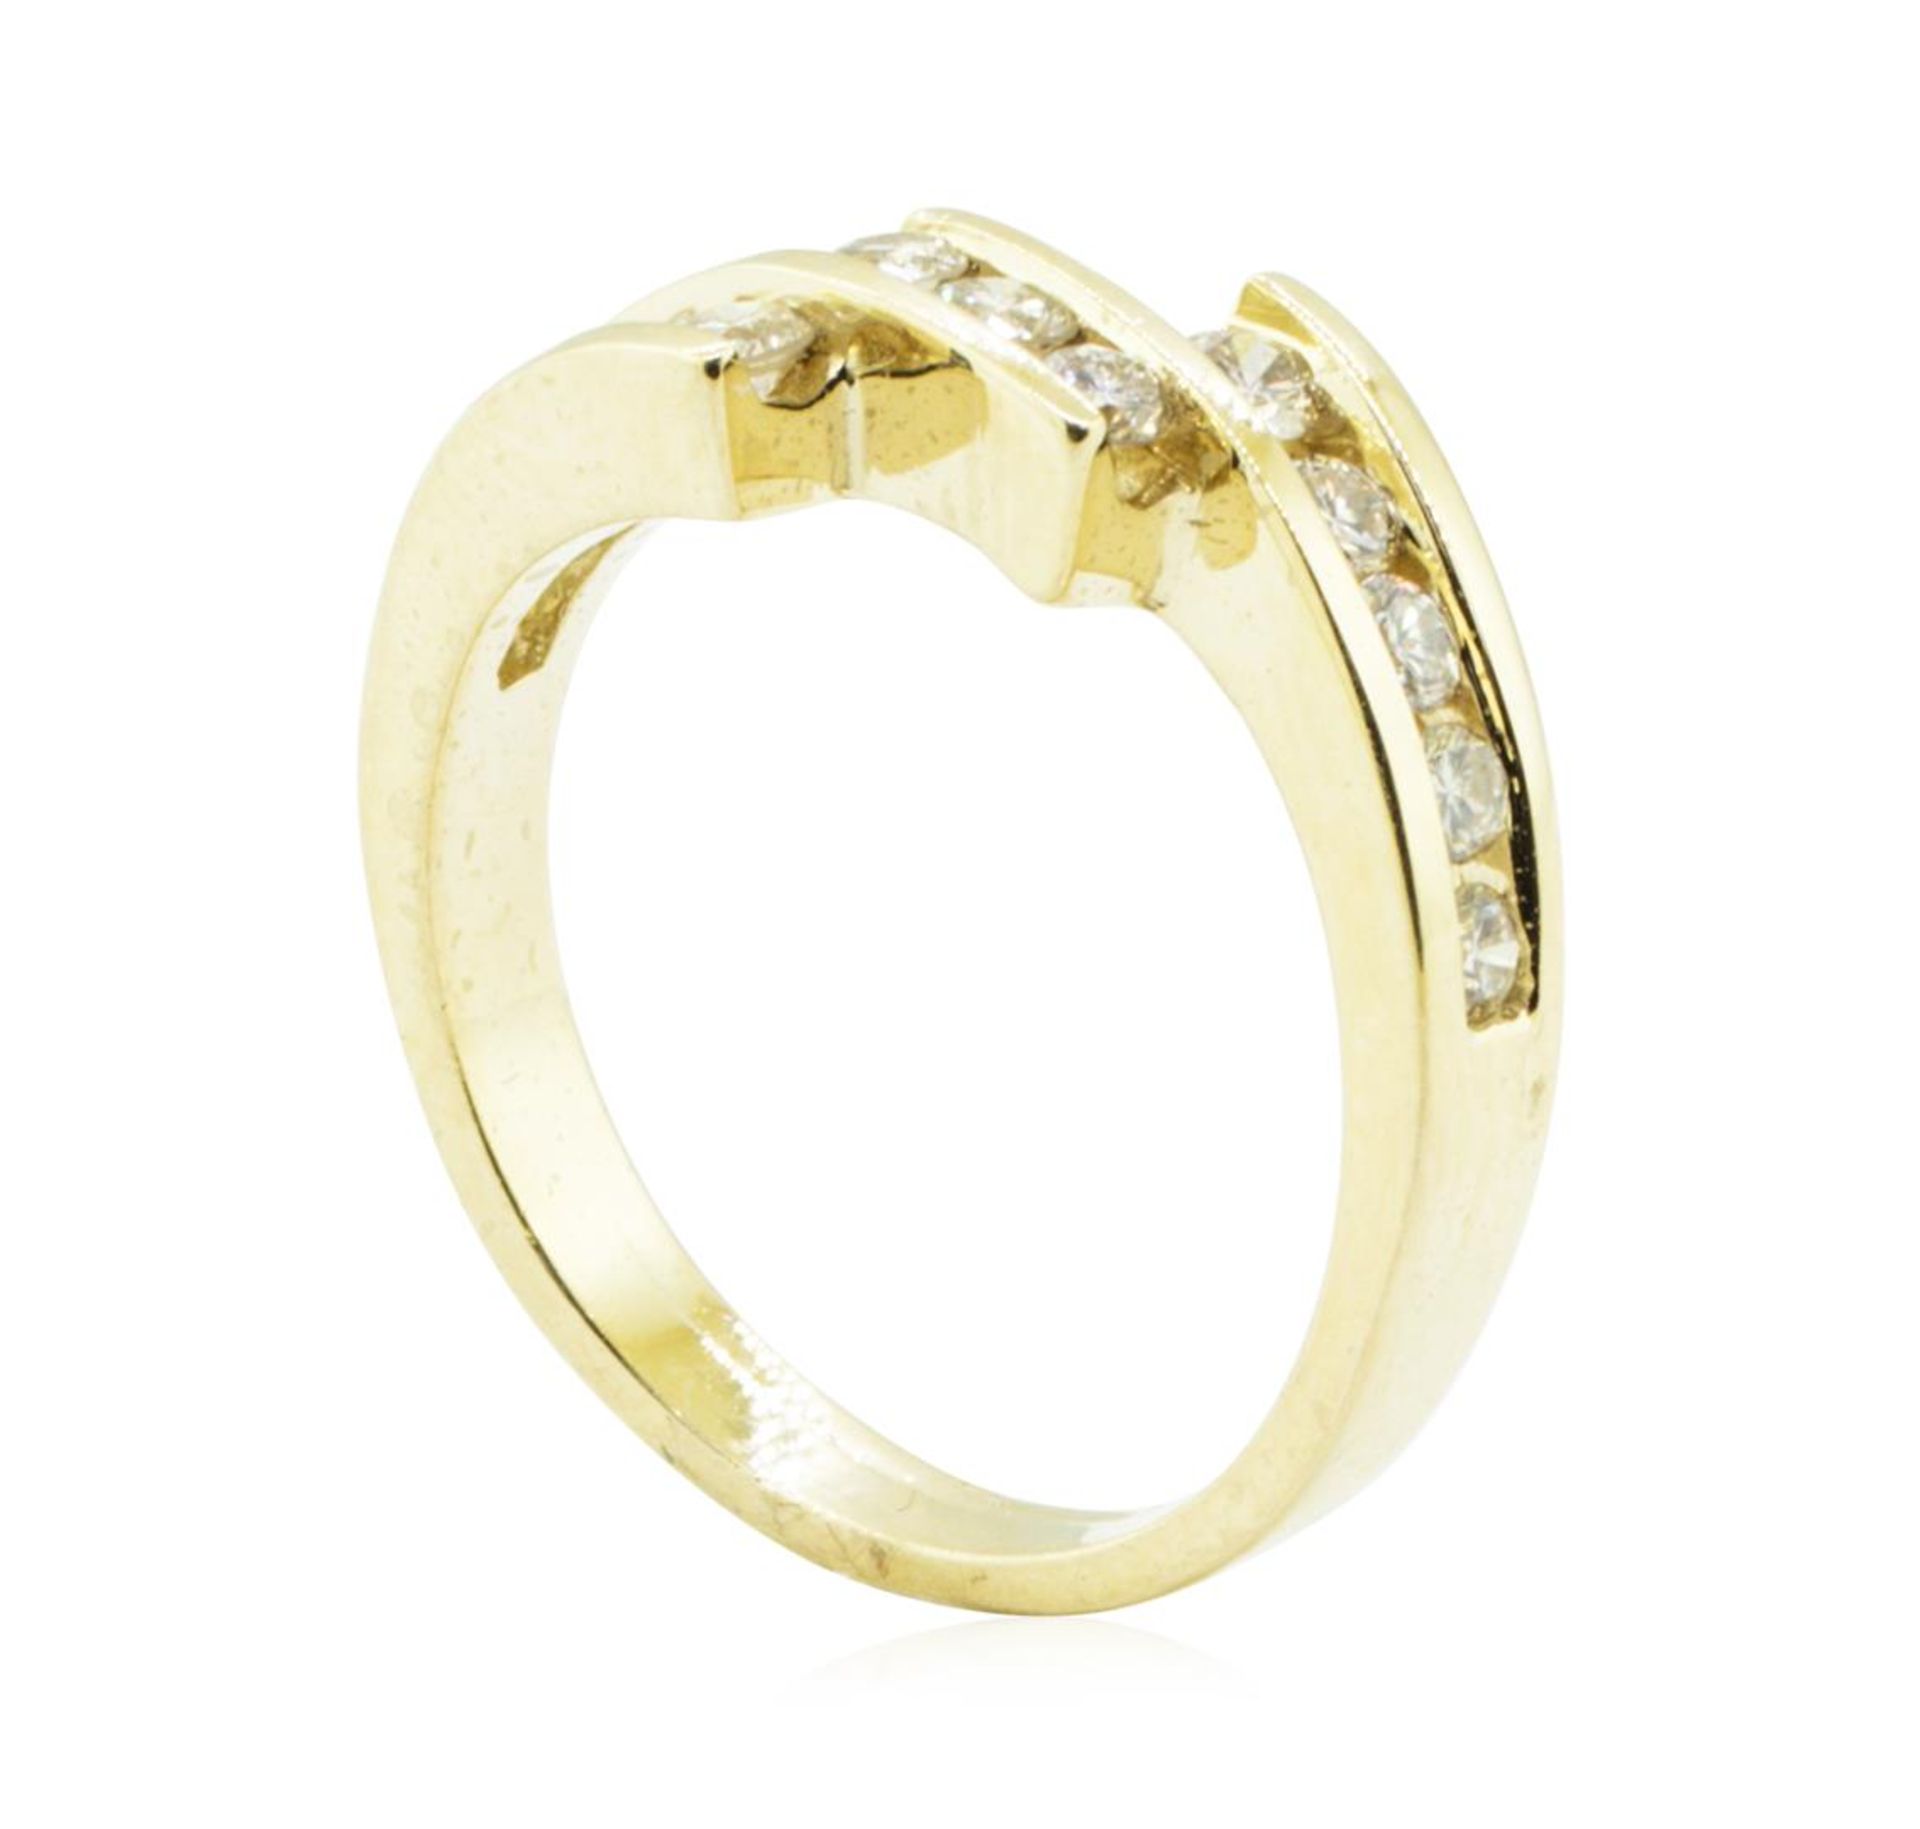 0.50 ctw Diamond Ring - 14KT Yellow Gold - Image 4 of 4